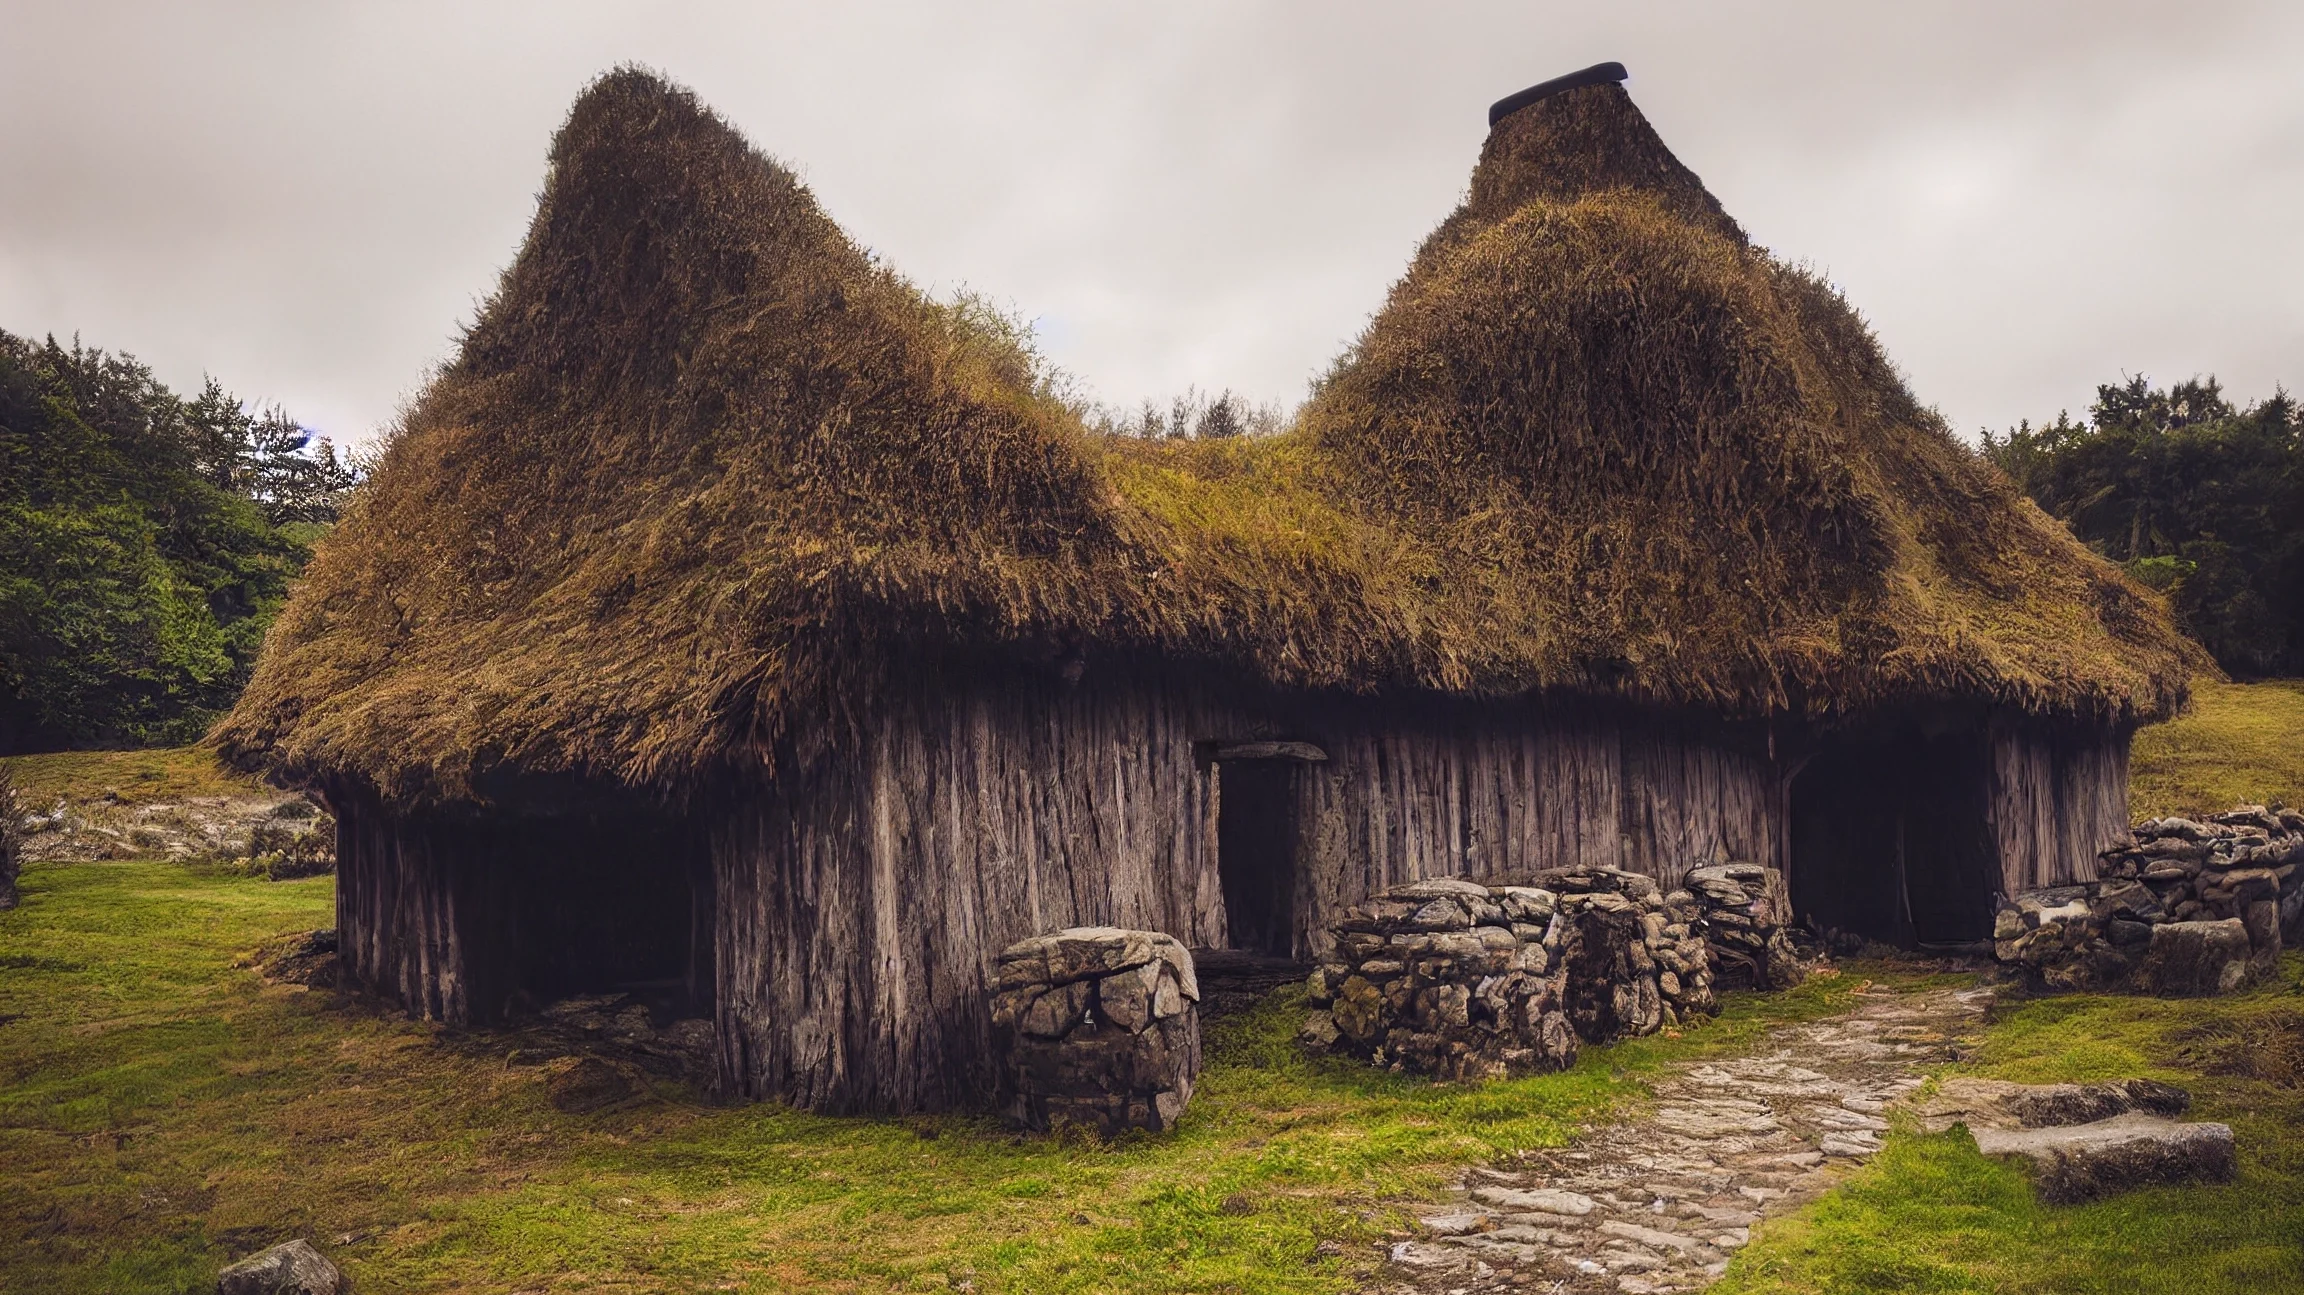 Viking long house